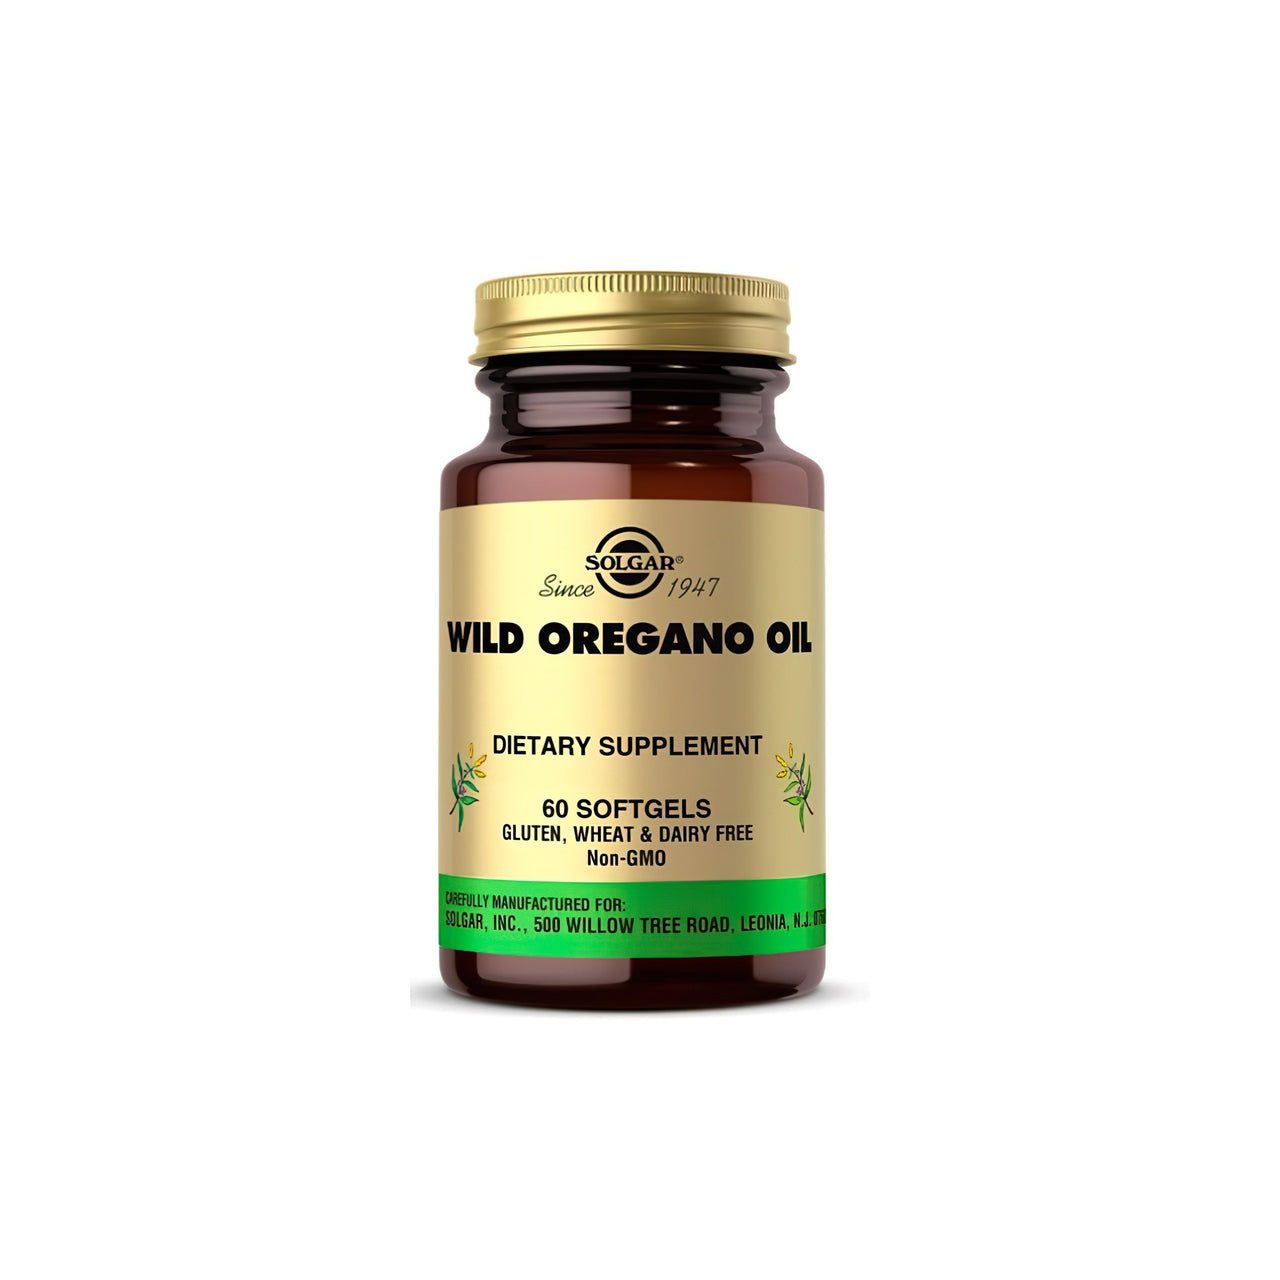 Wild Oregano Oil 175 mg 60 Softgels - front